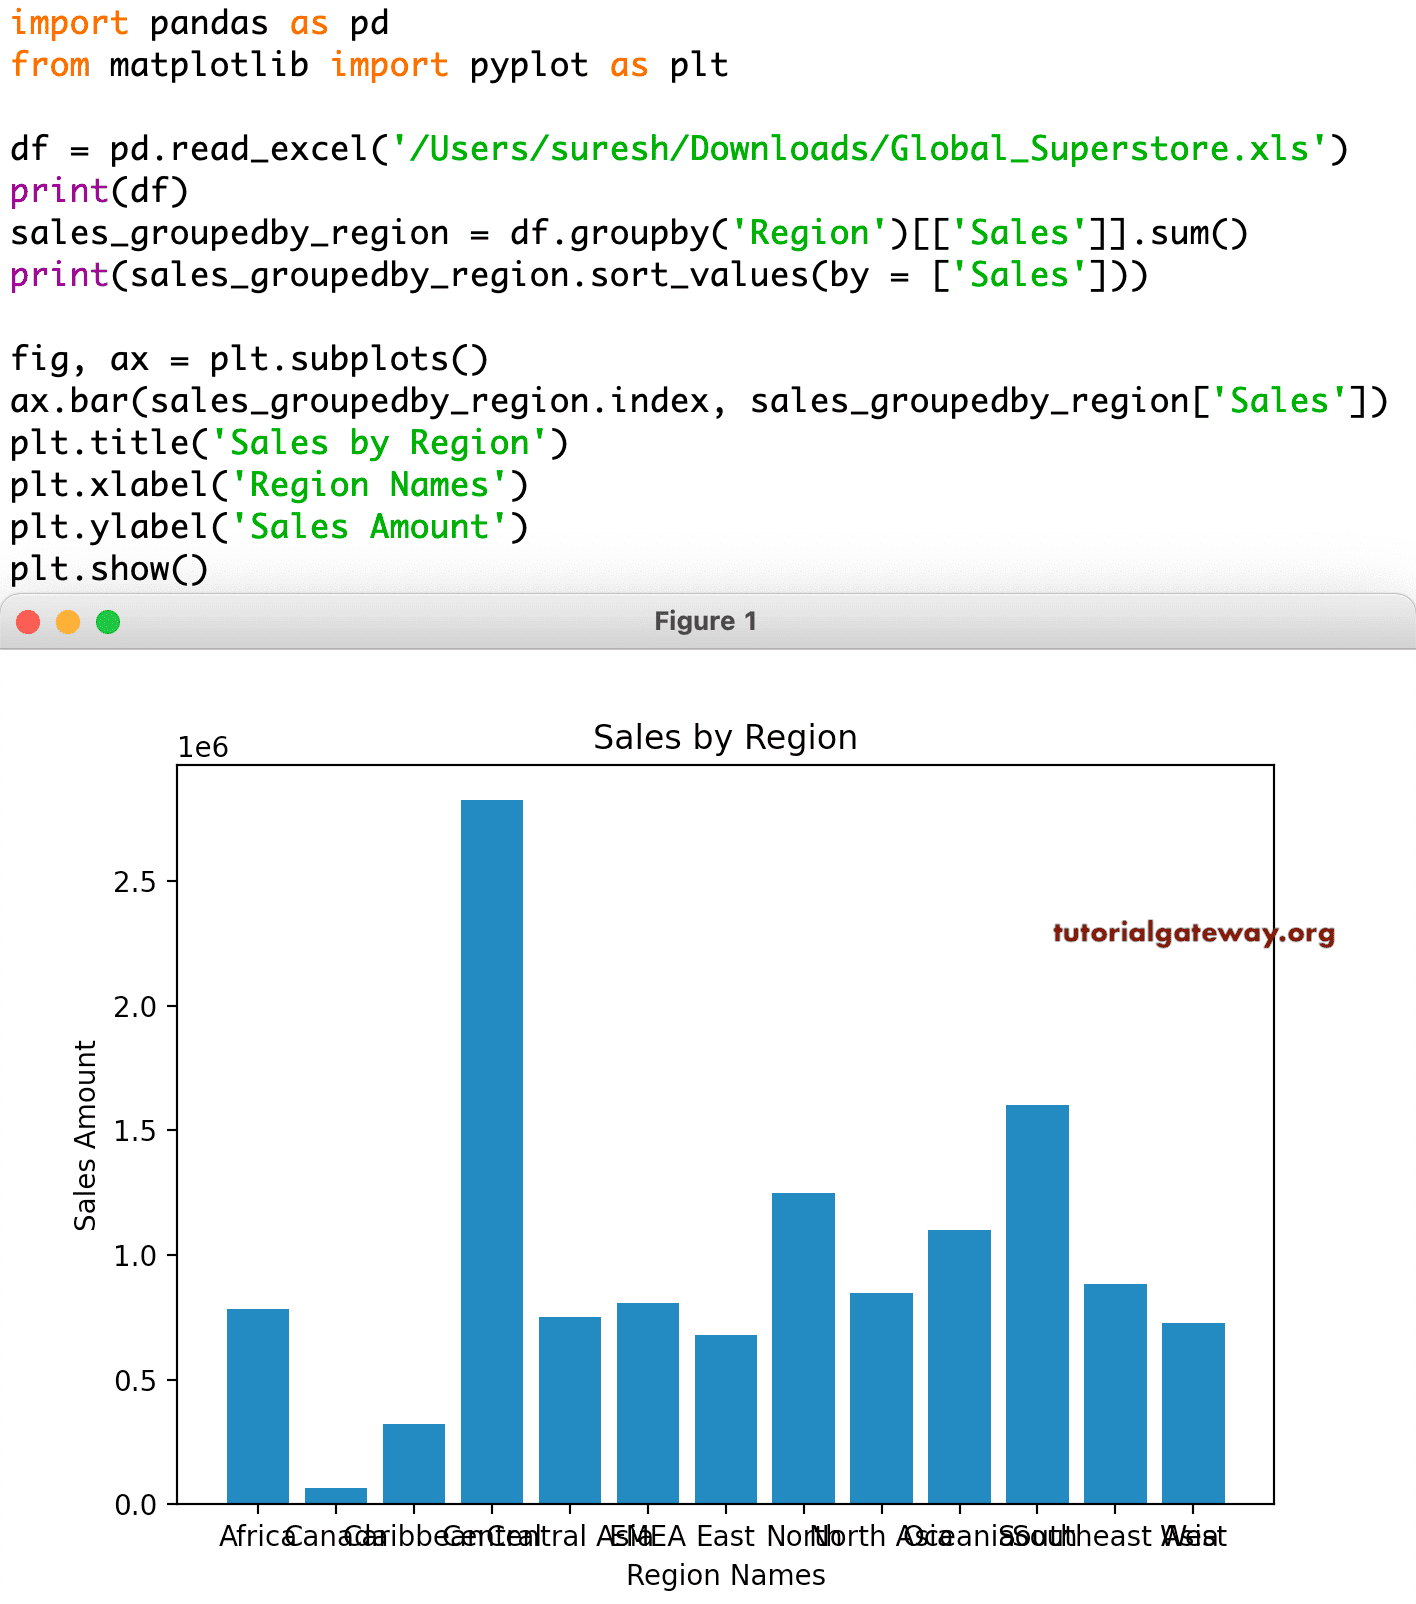 Python Matplotlib Bar Chart